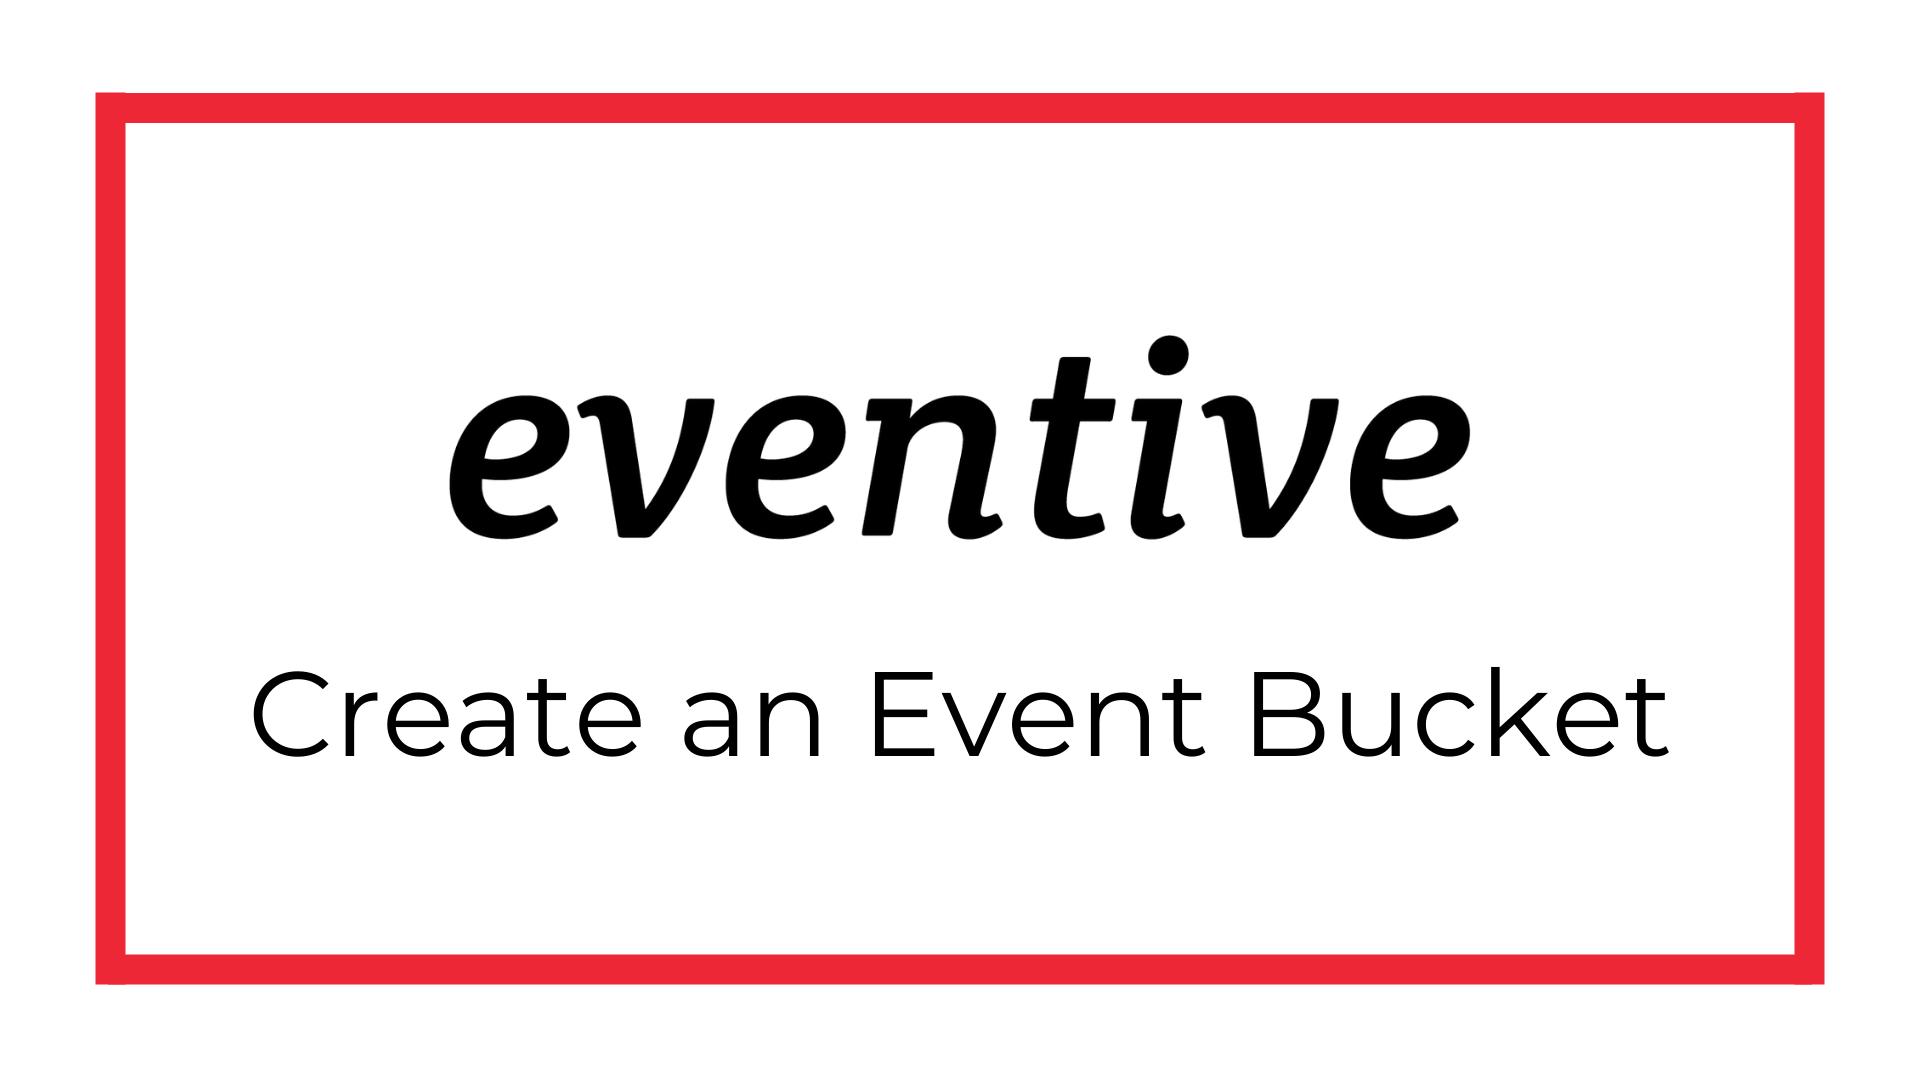 Create an Event Bucket